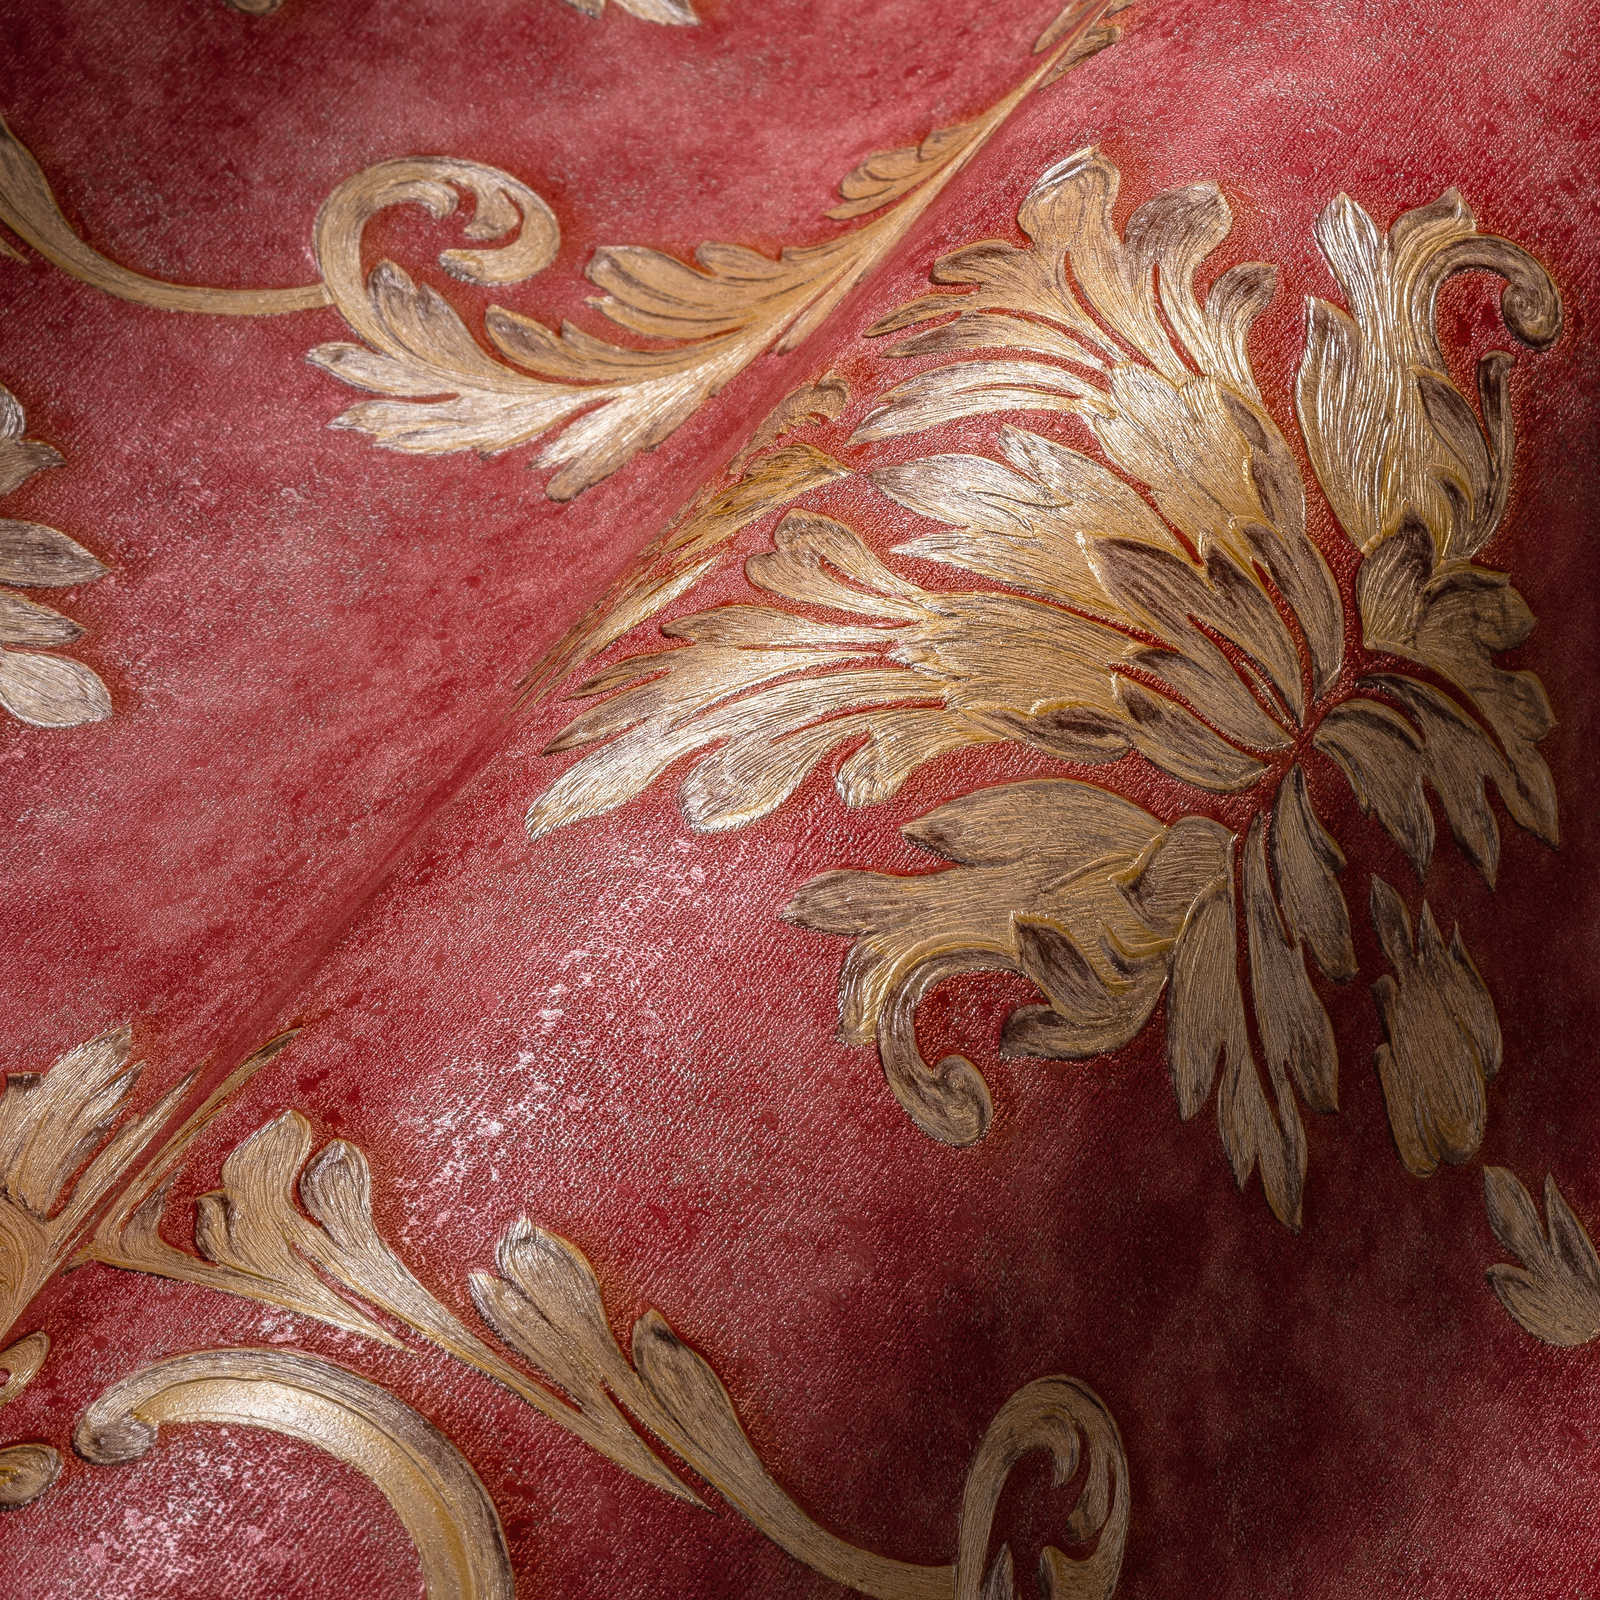             Designertapete florale Ornamente & Metallic-Effekt – Rot, Gold
        